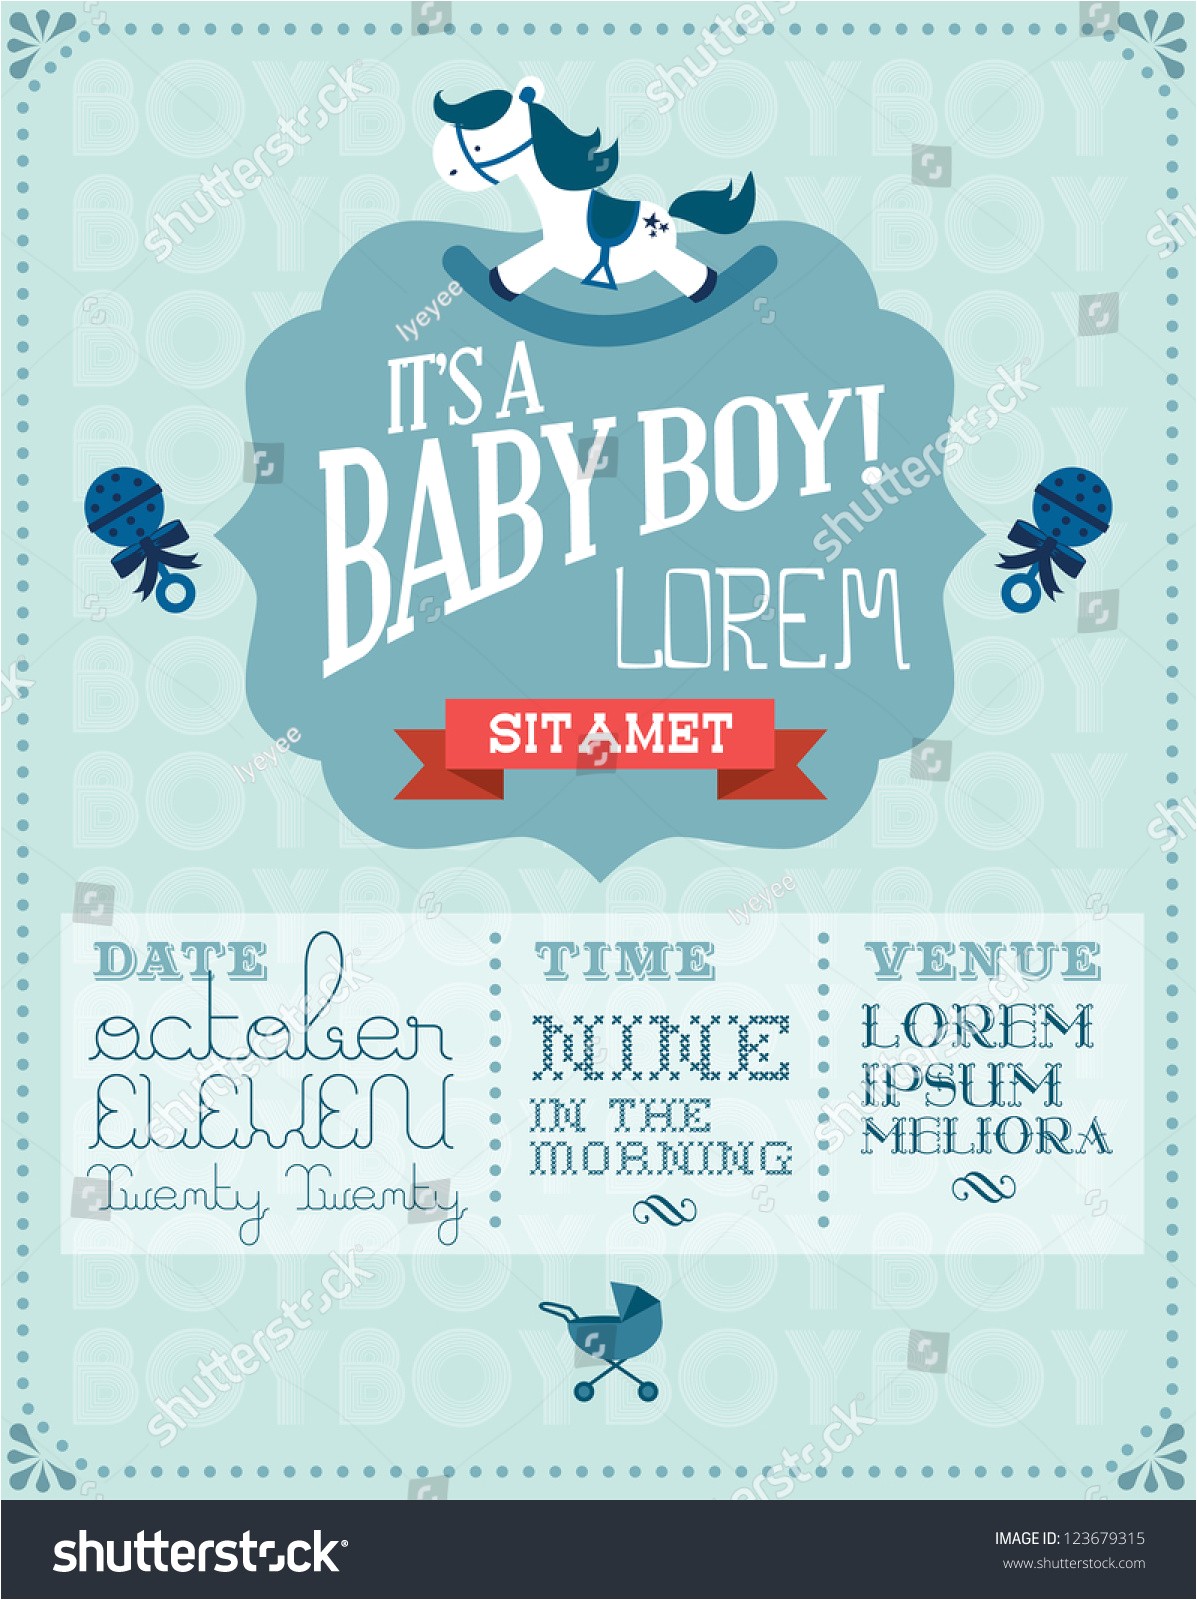 baby boy shower invitation card template